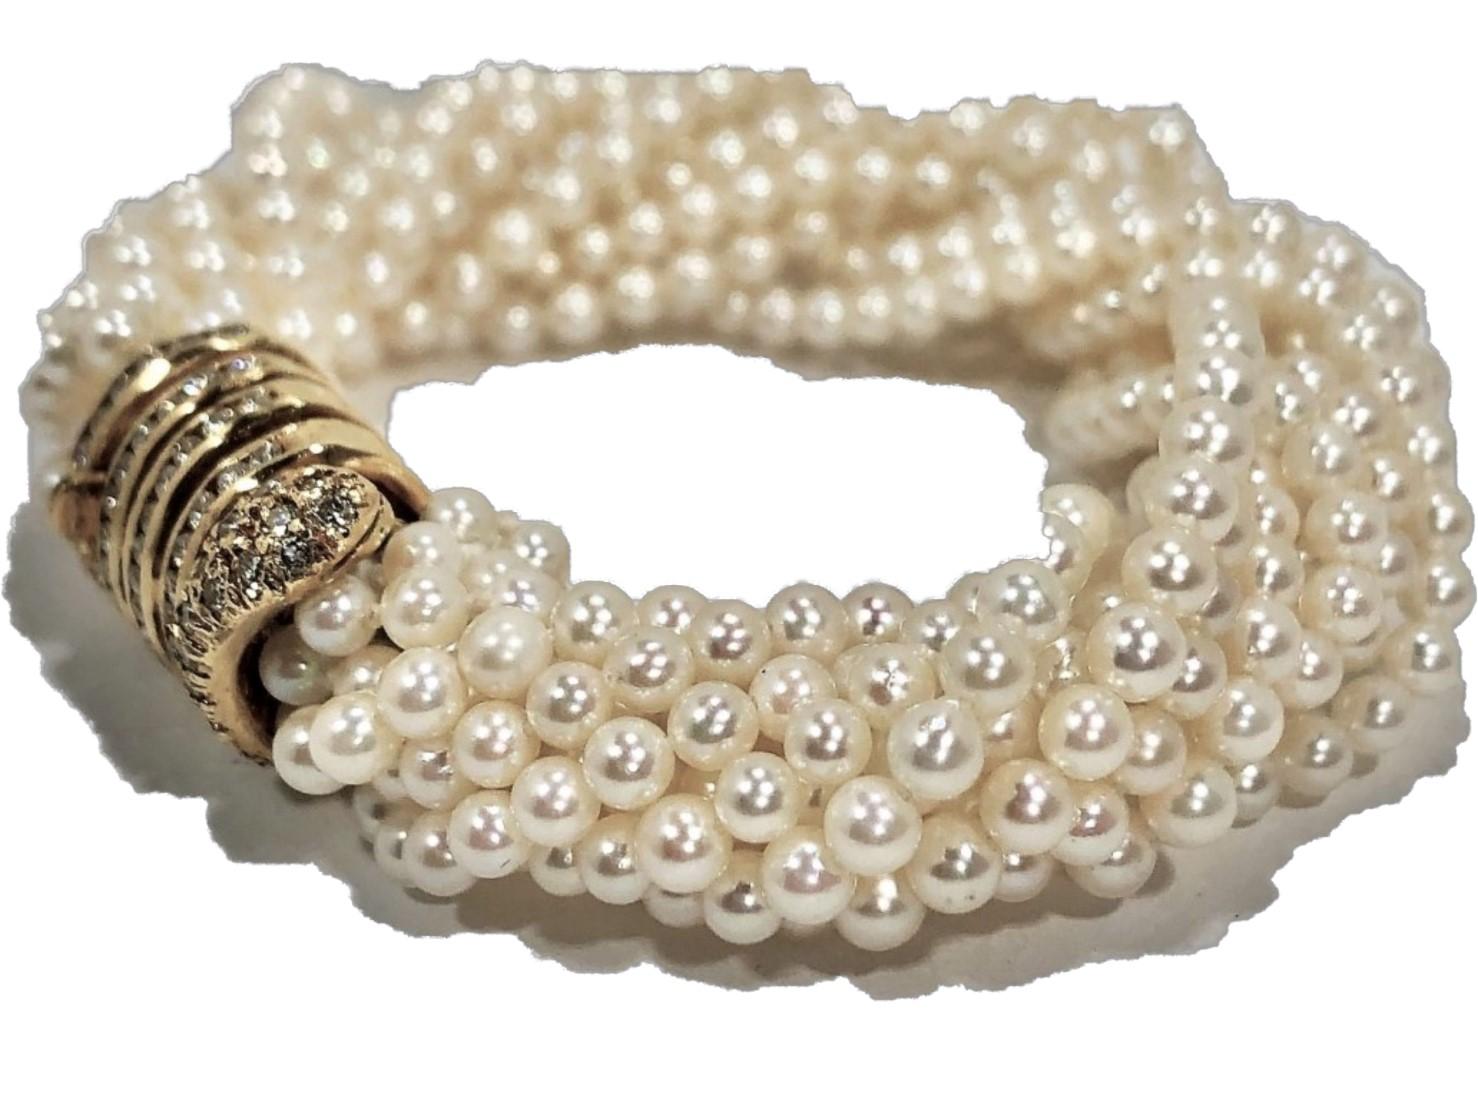 bm strand of pearls